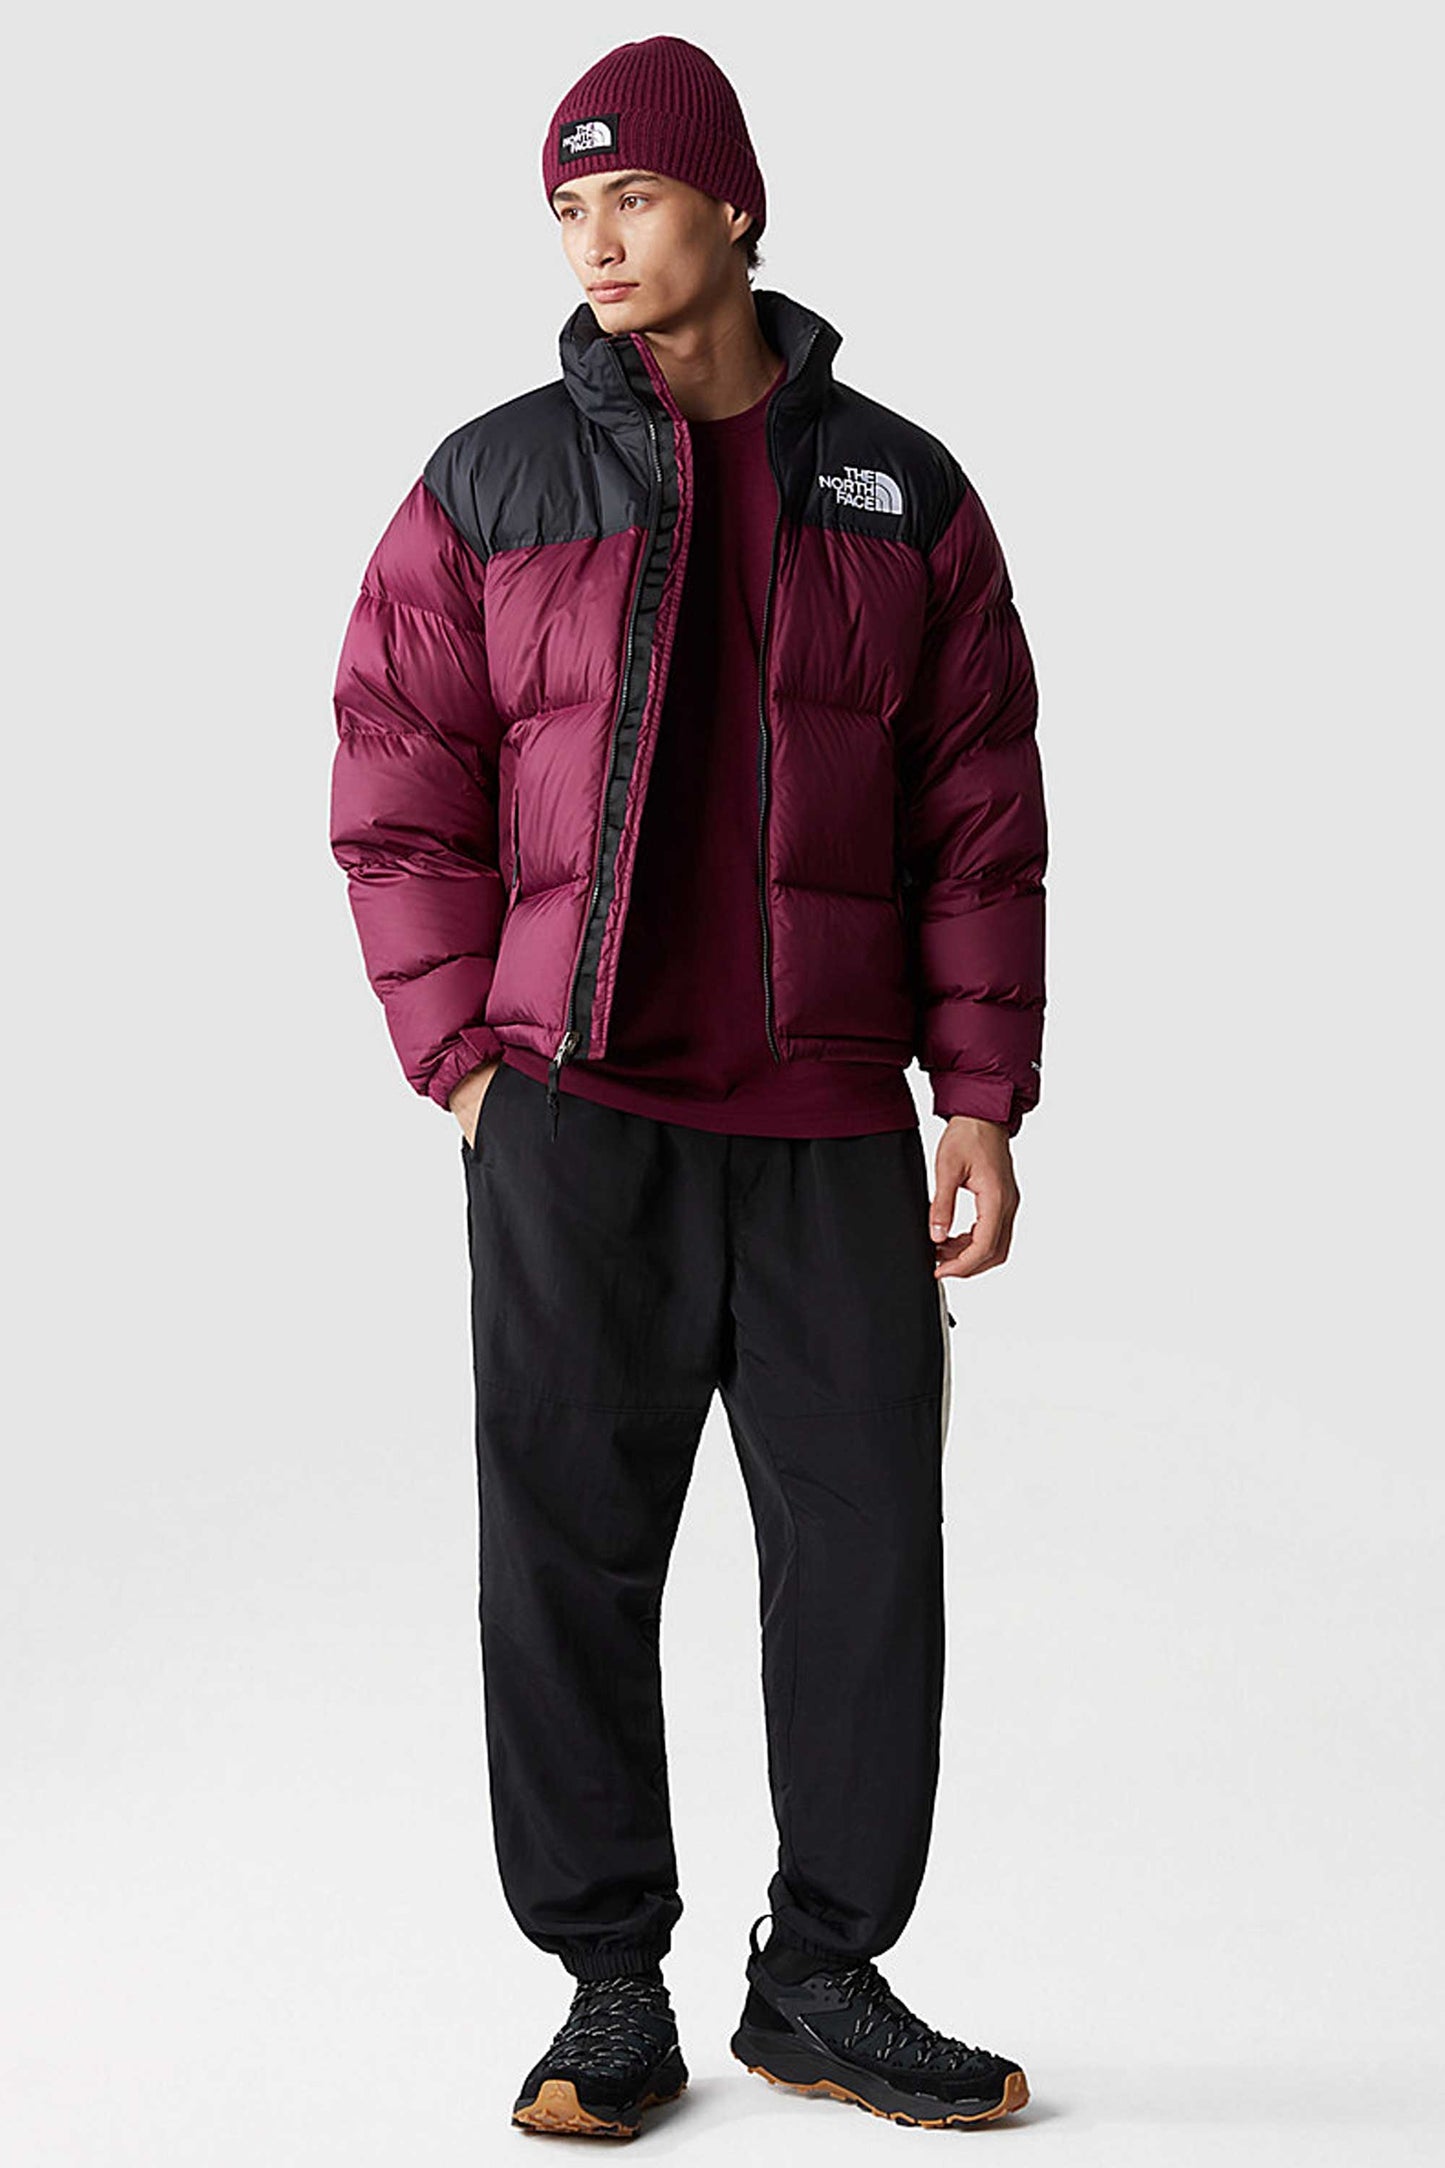 Pukas-Surf-Shop-the-north-face-jacket-1996-retro-nuptse-boysenberry-black